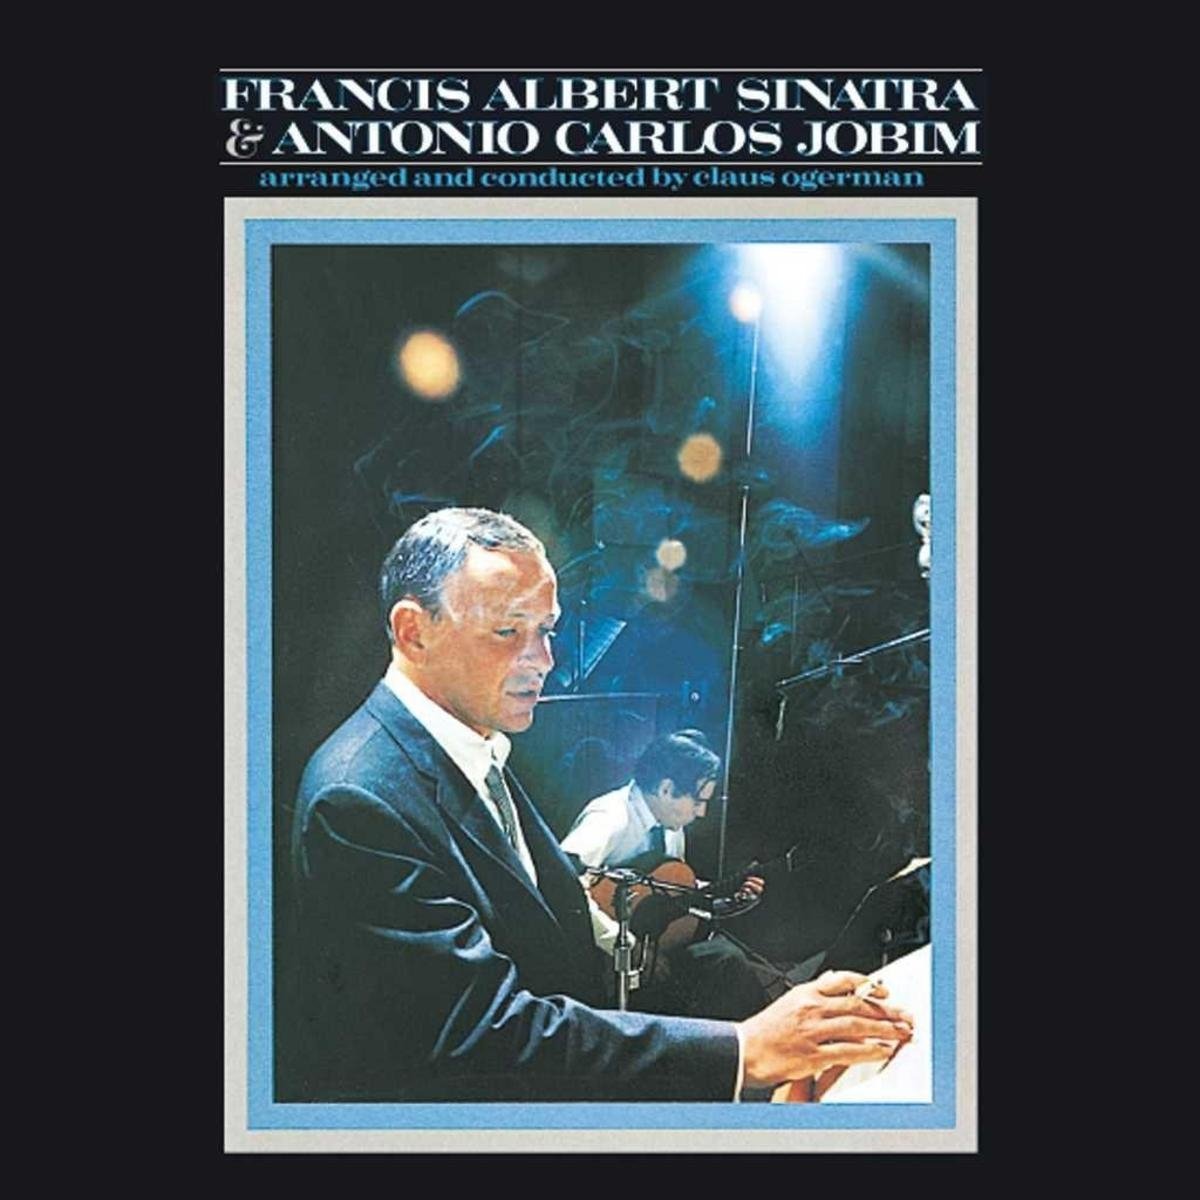 Francis Albert Sinatra & Antonio Carlos Jobim | Frank Sinatra, Antonio Carlos Jobim